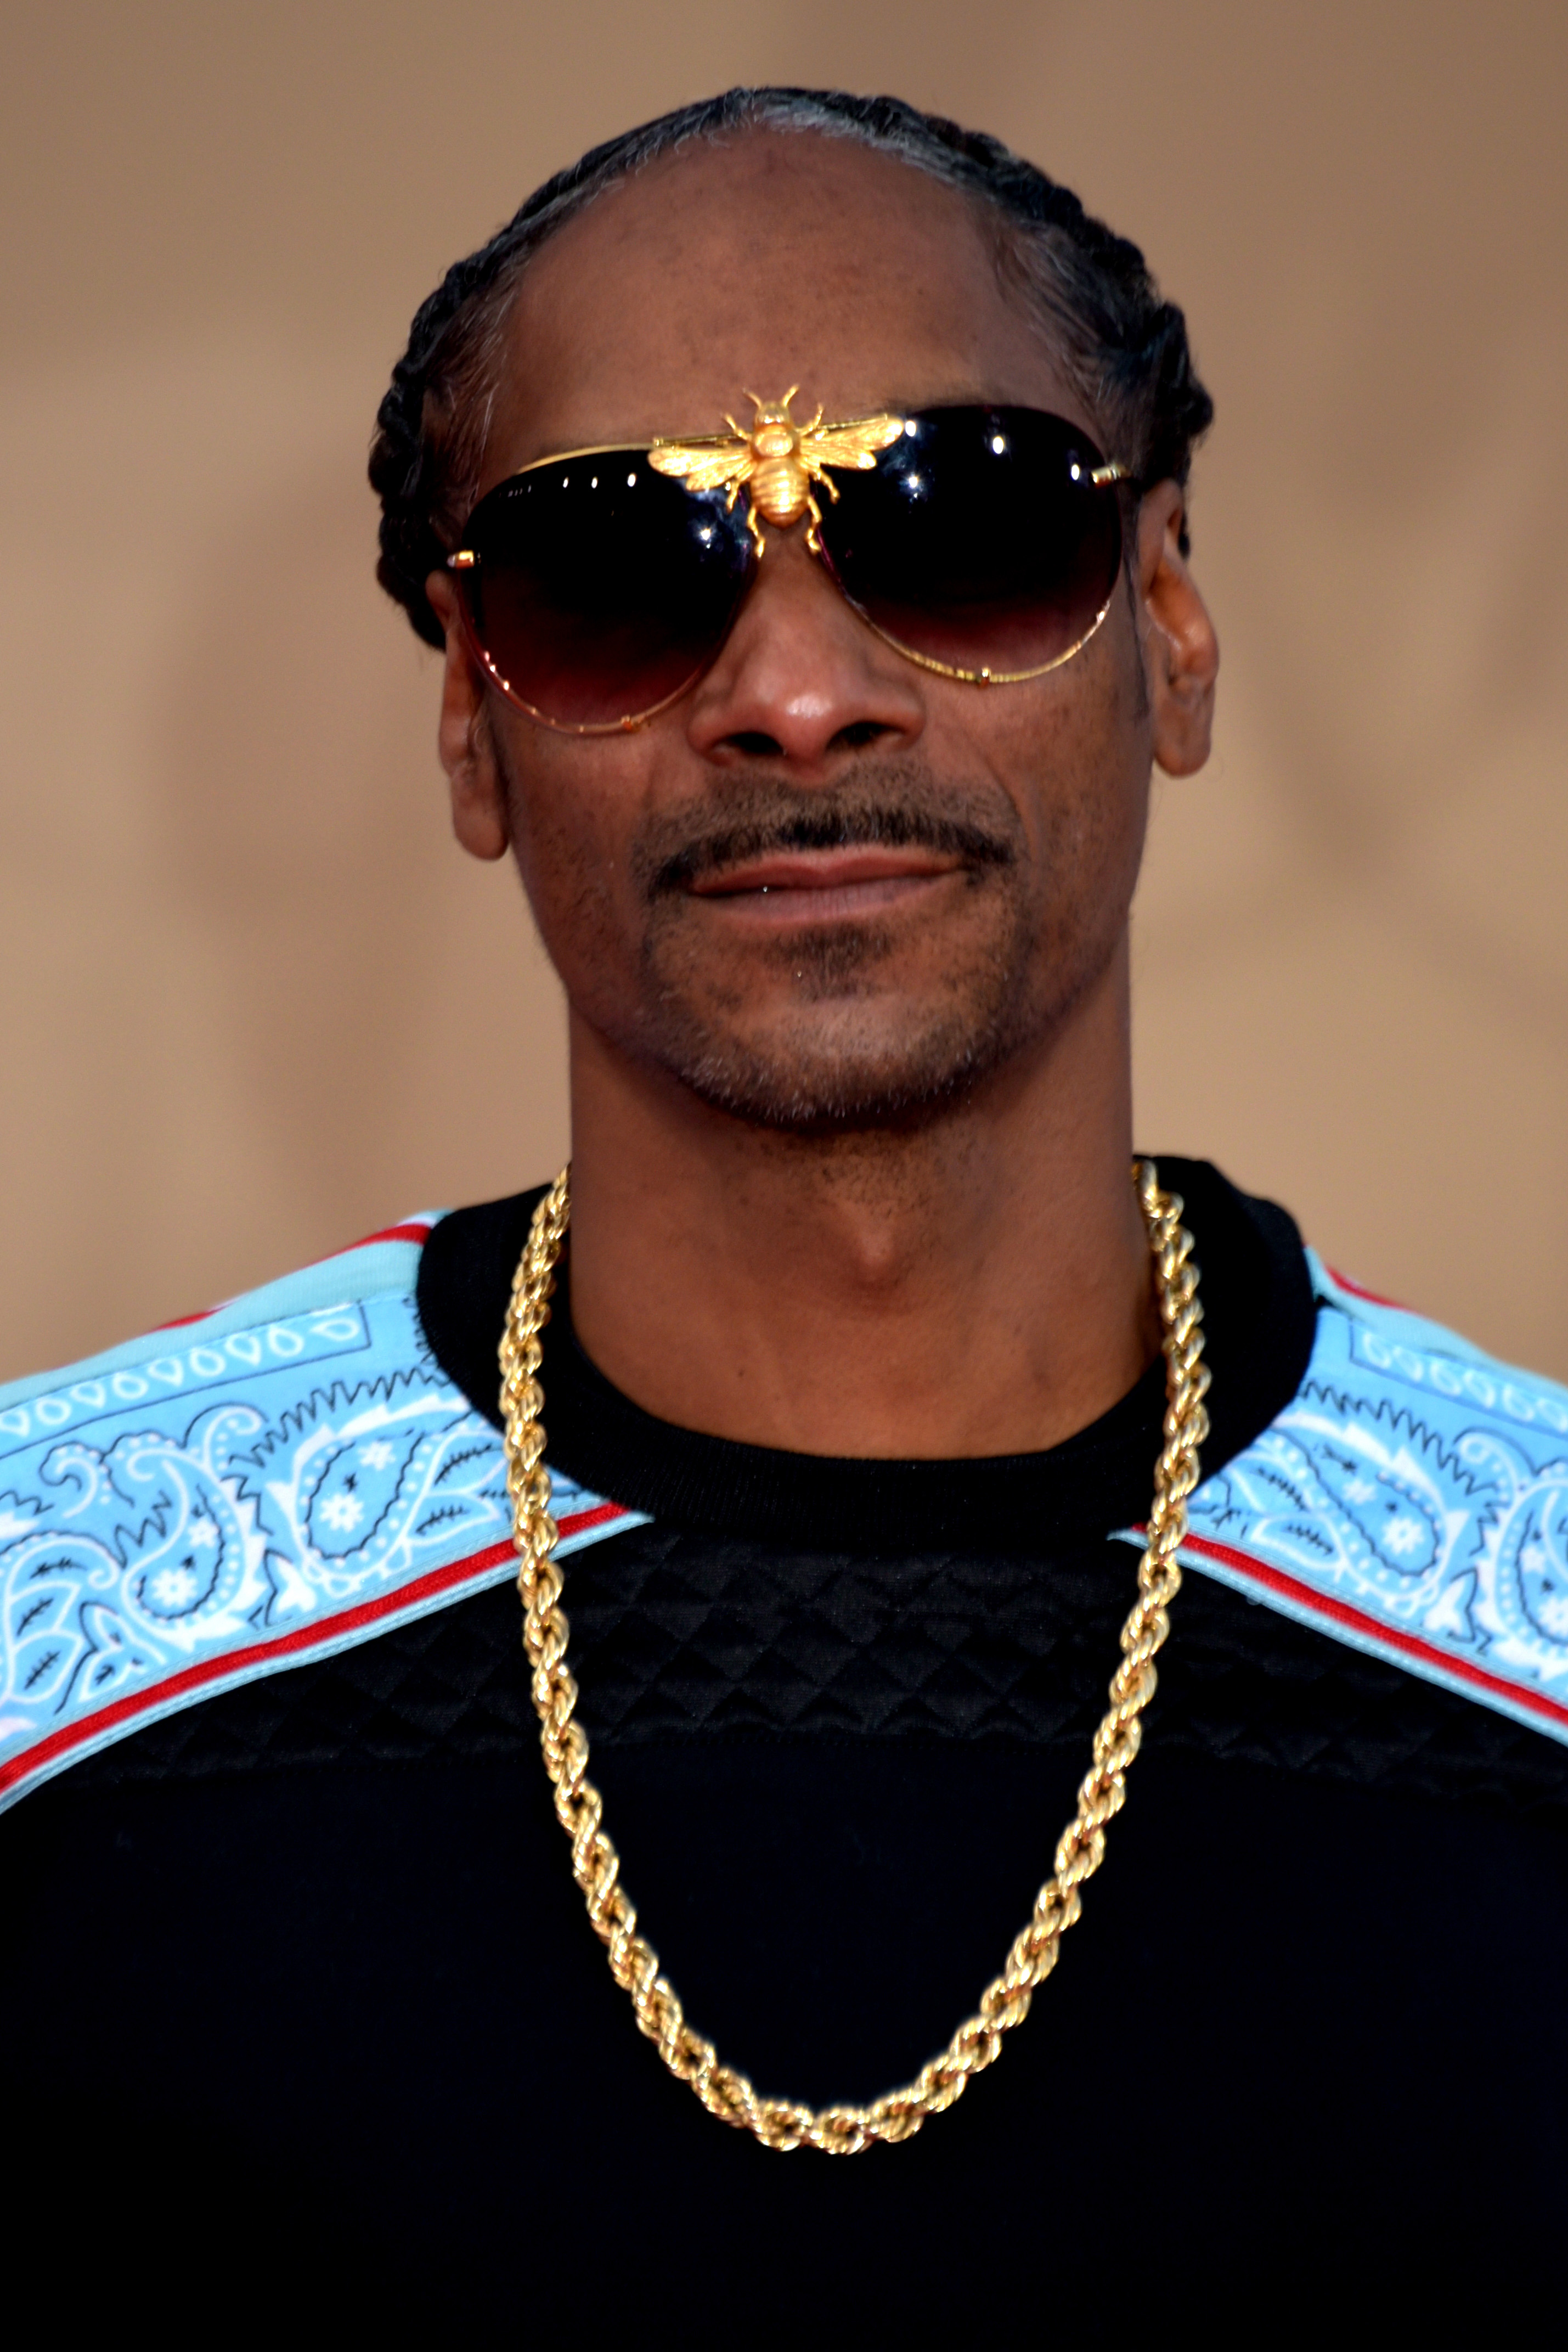 Snoop dogg rages live